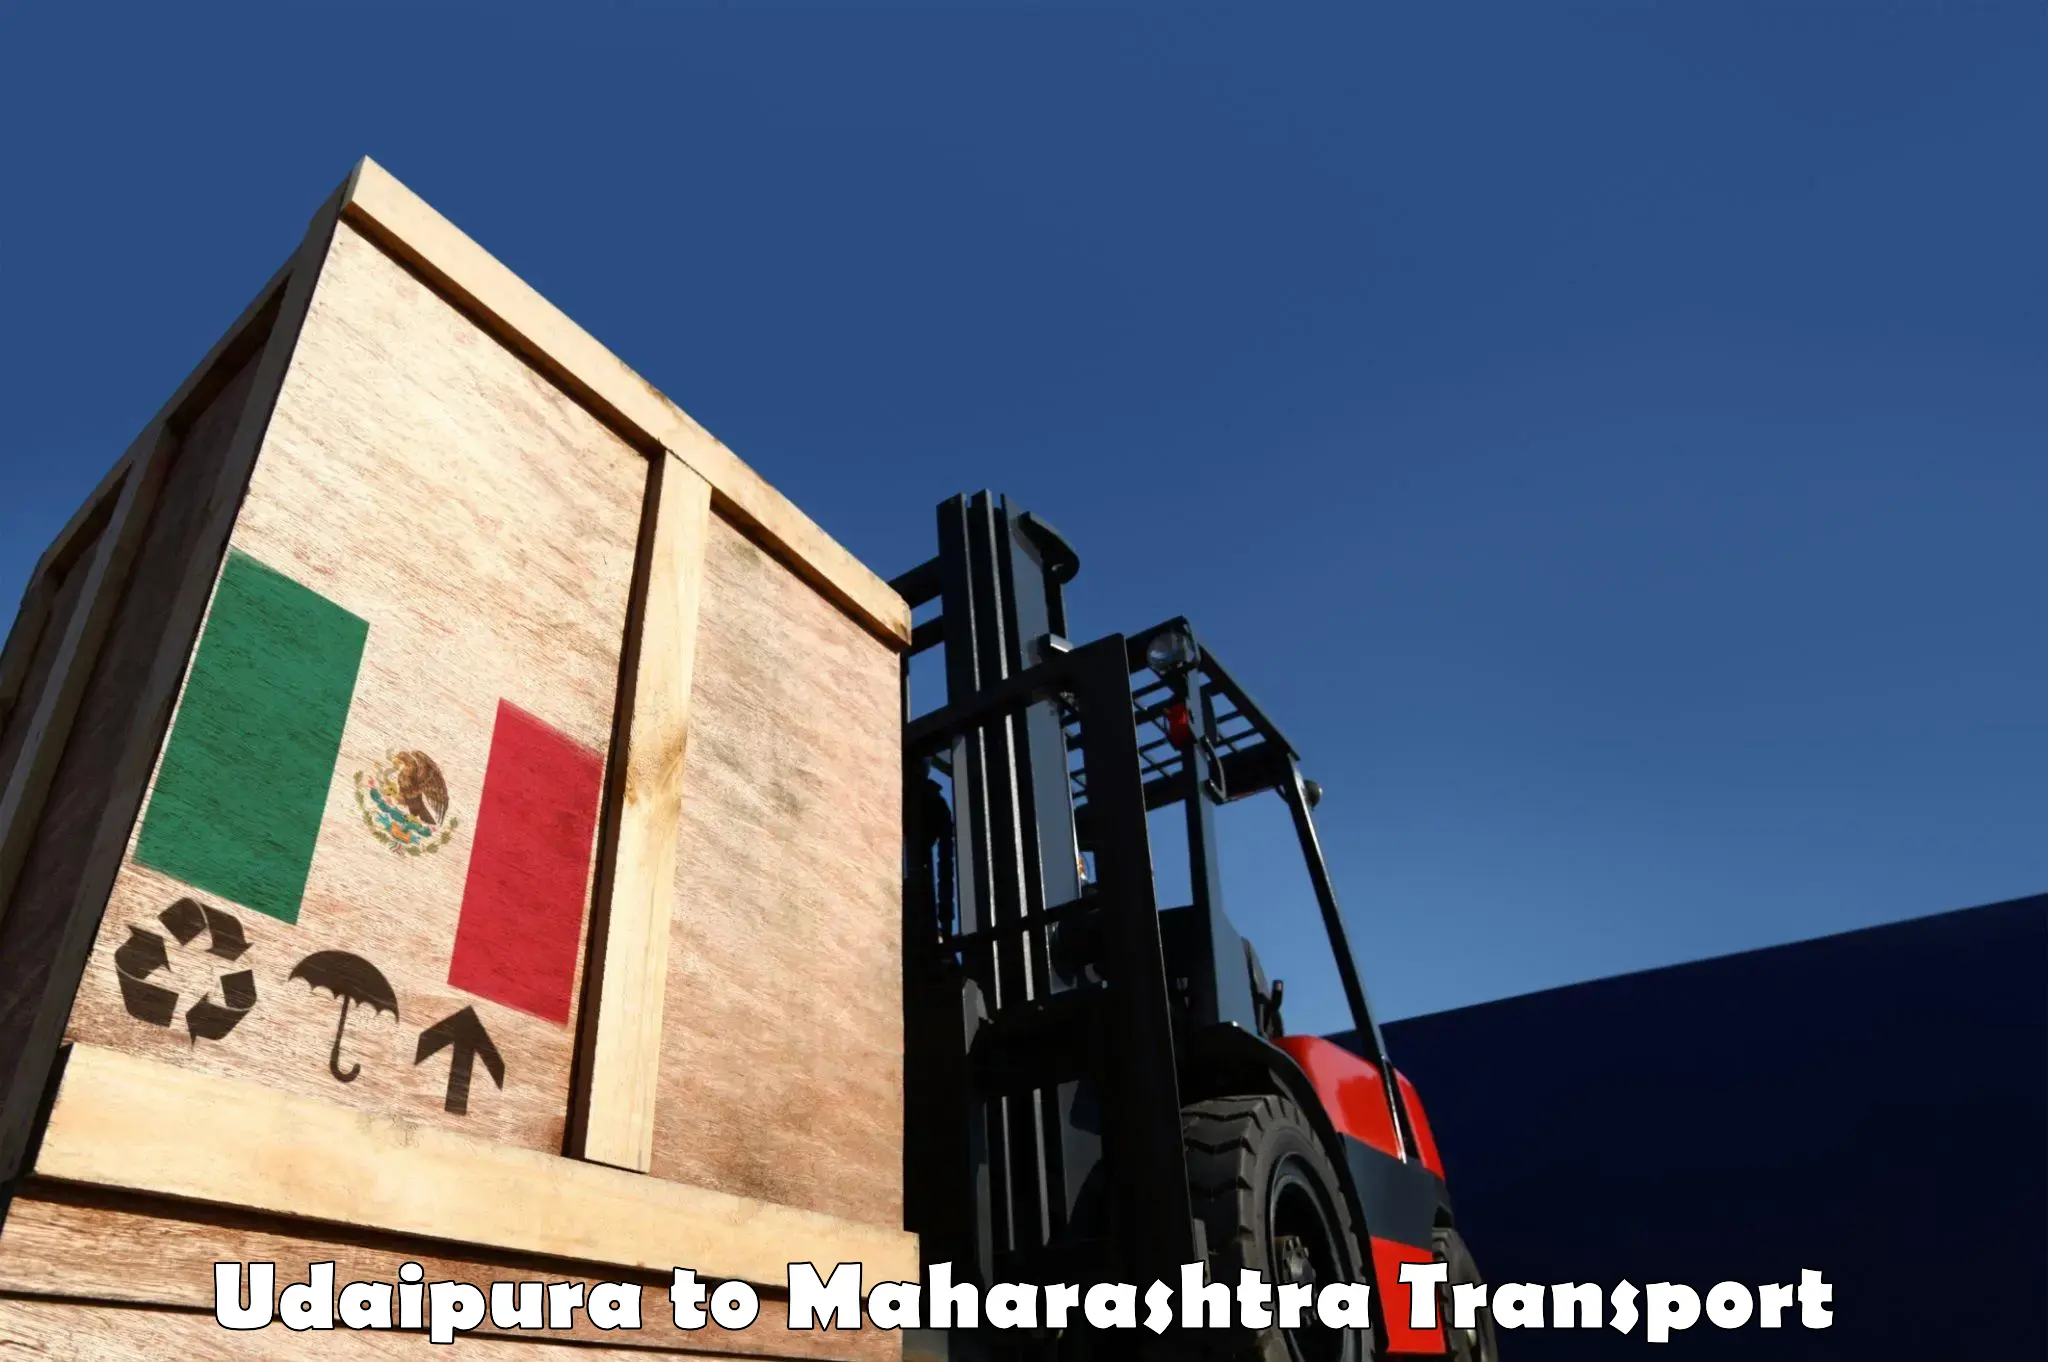 Truck transport companies in India Udaipura to Ambajogai